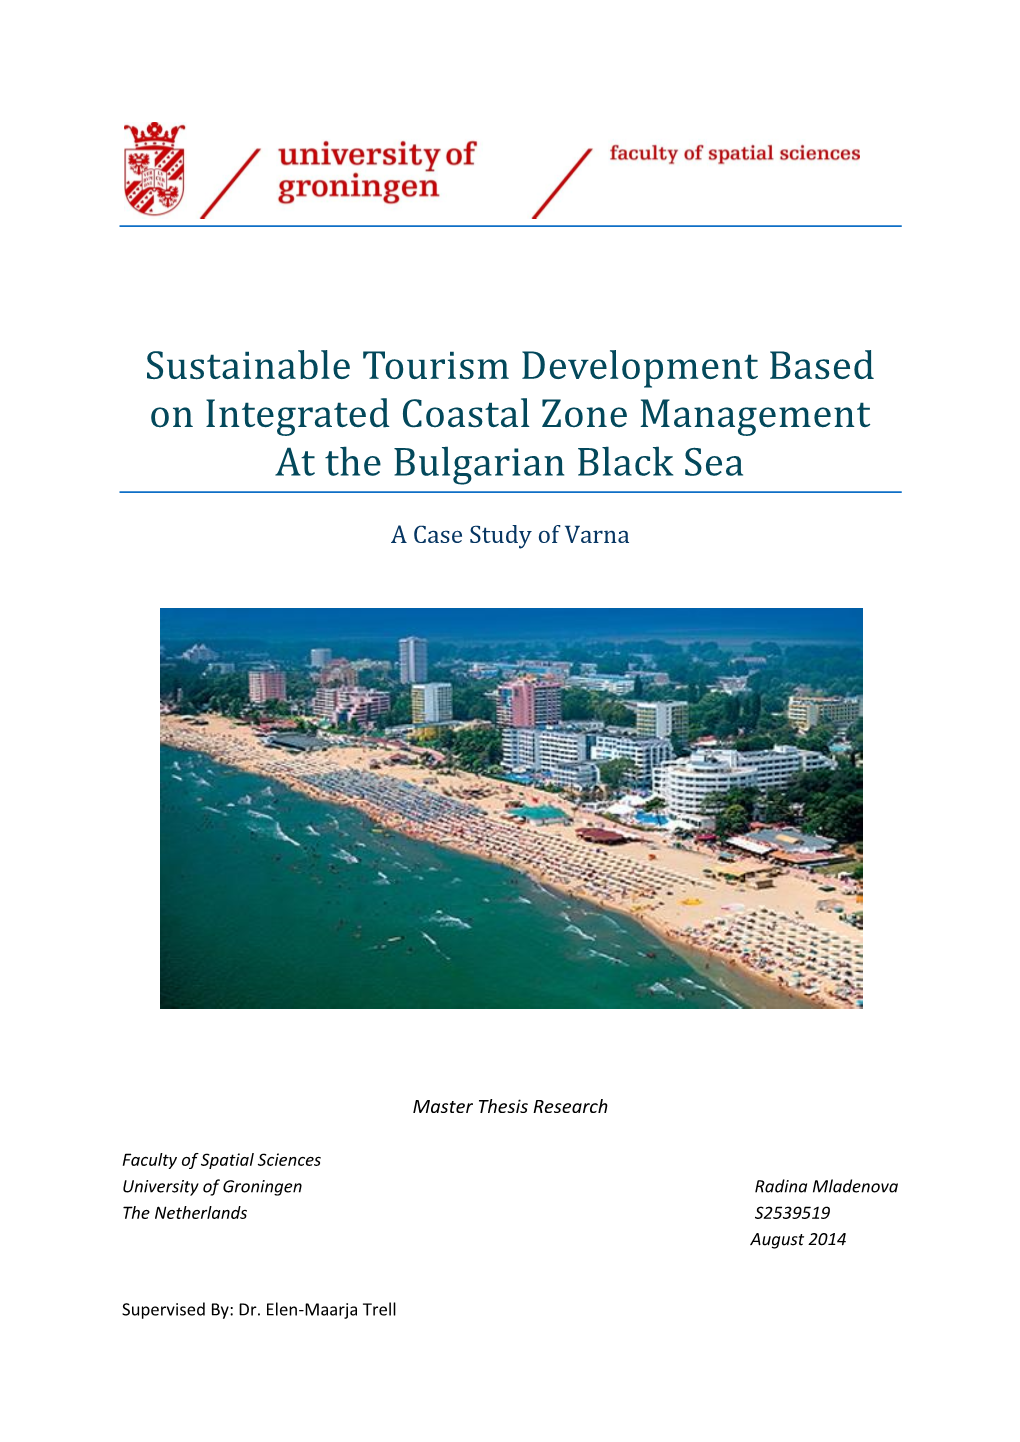 Sustainable Tourism Development Based on Integrated Coastal Zone Management at the Bulgarian Black Sea